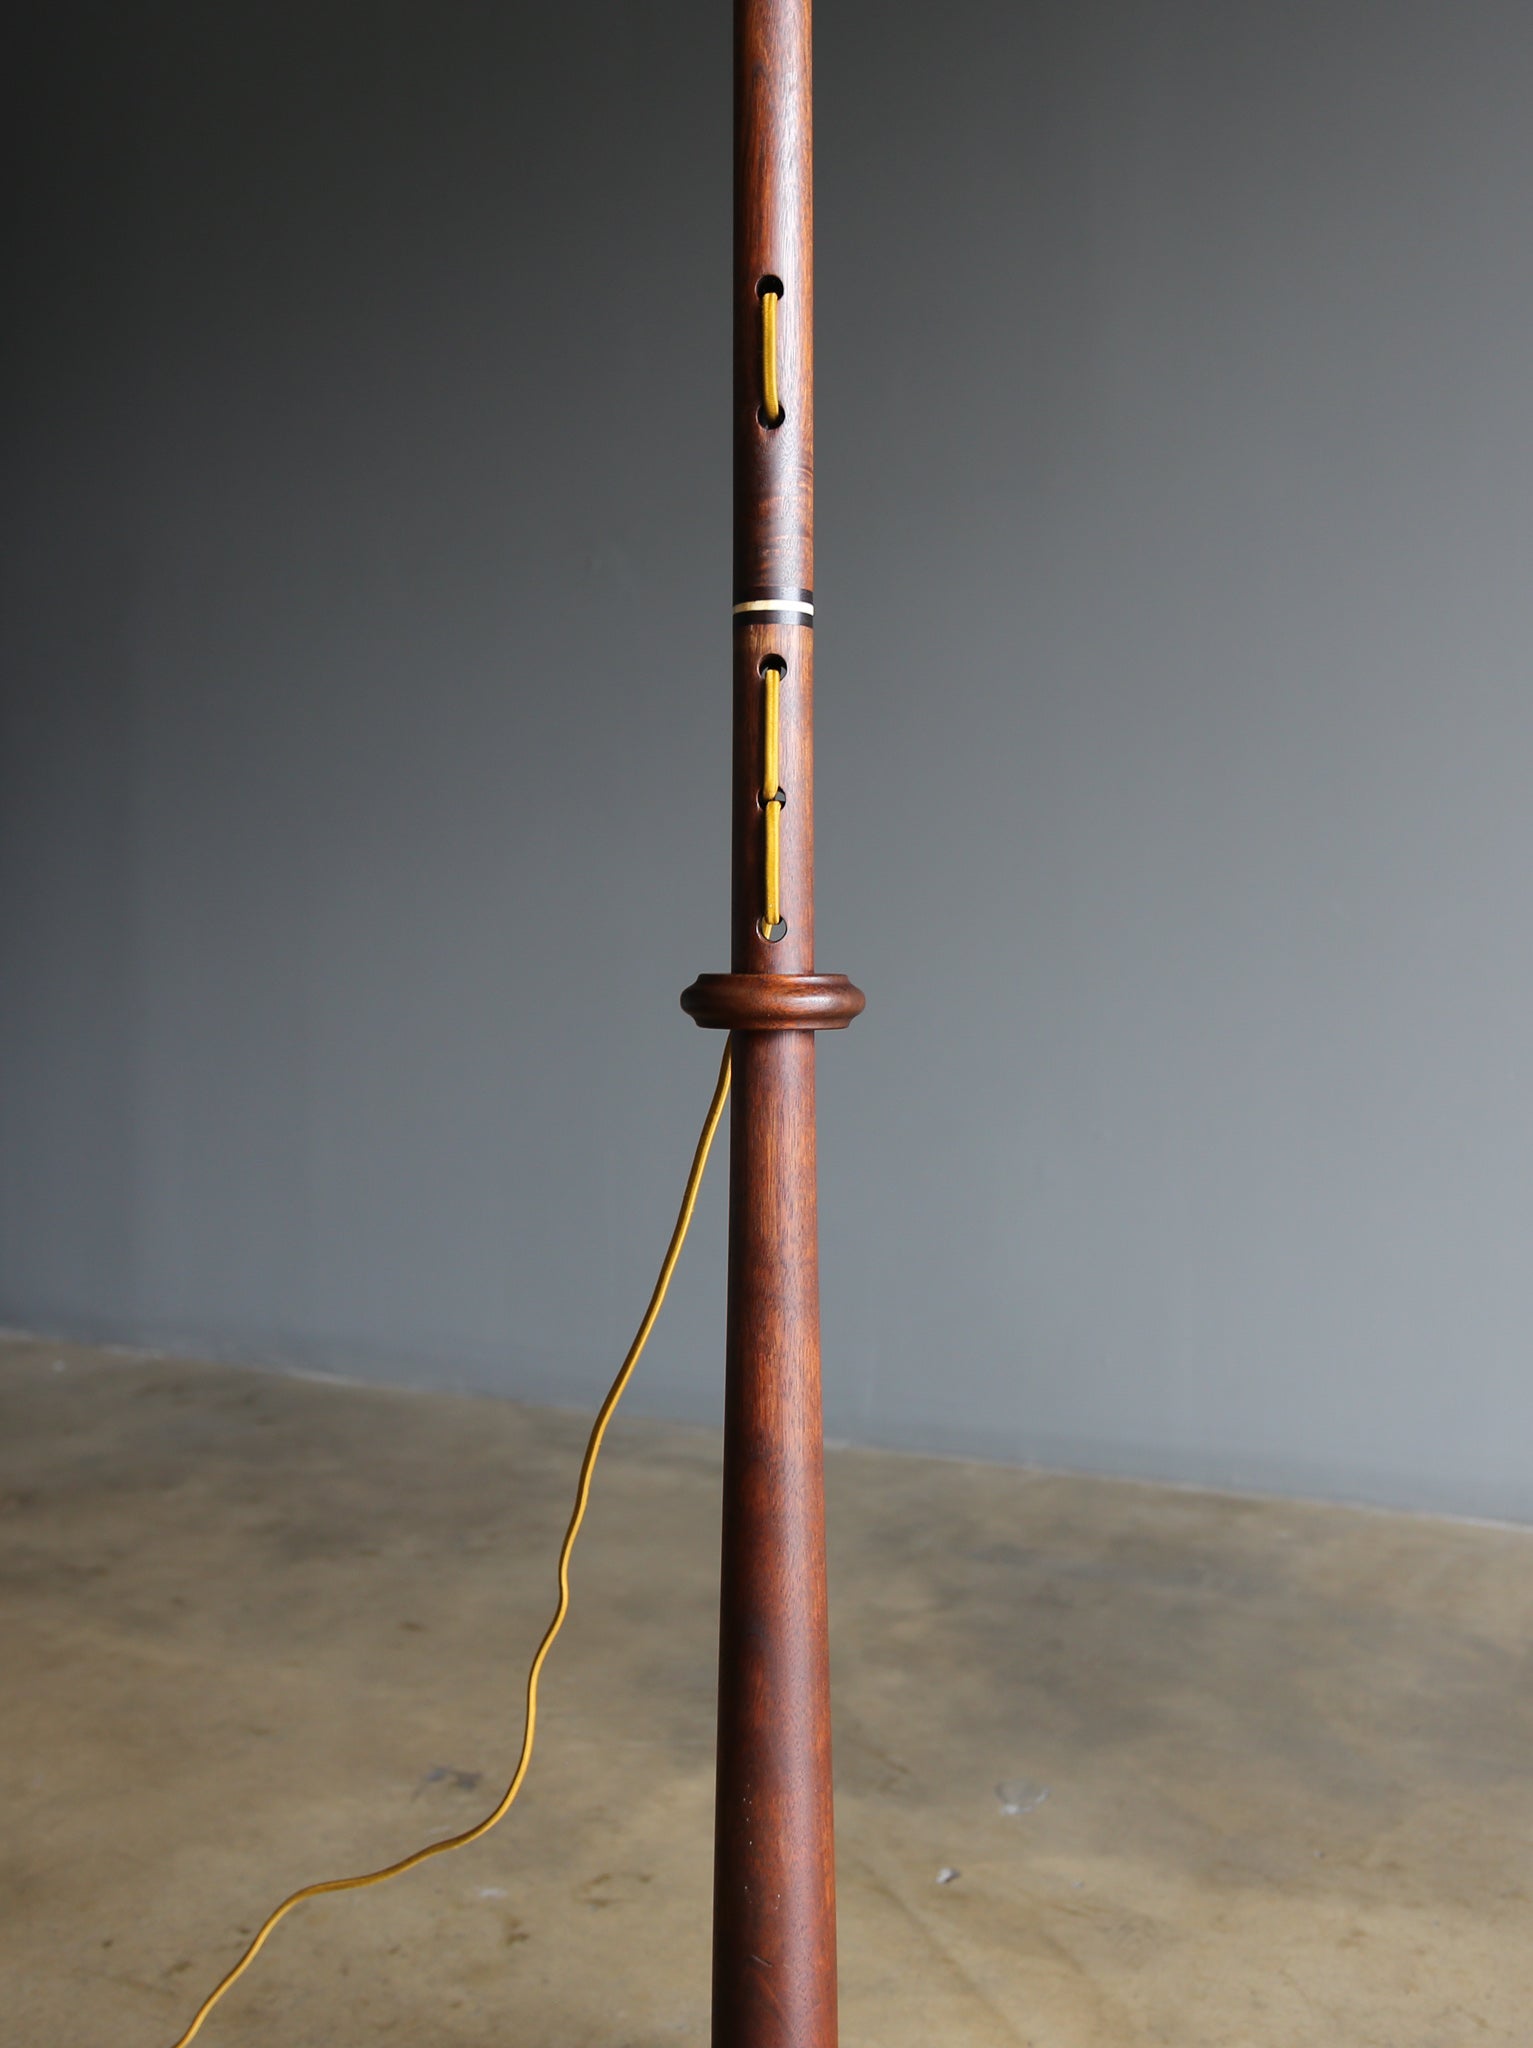 = SOLD = John Nyquist Handcrafted Walnut Floor Lamp, circa 1970